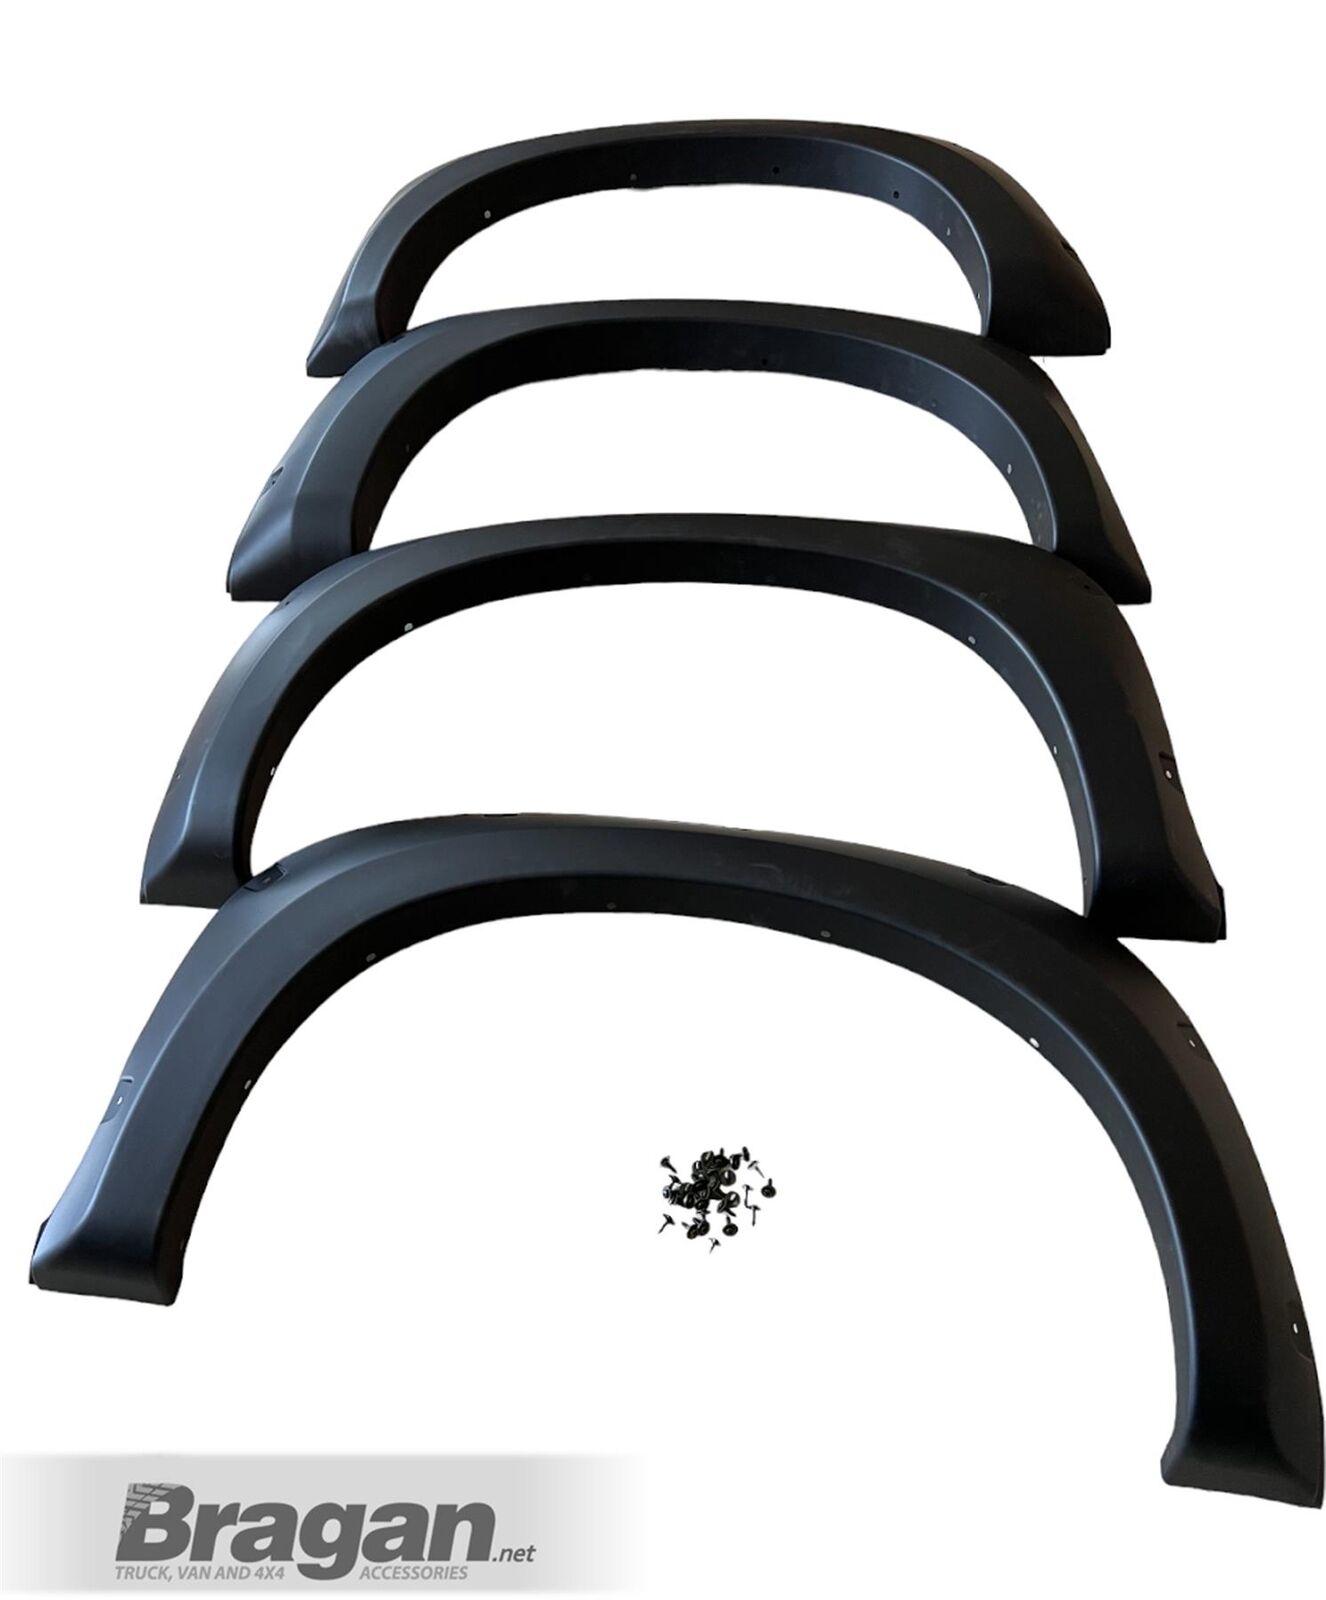 Fender Flare For Isuzu D-MAX 2012-2019 4x4 Wheel Black Arch Mudguard Protection